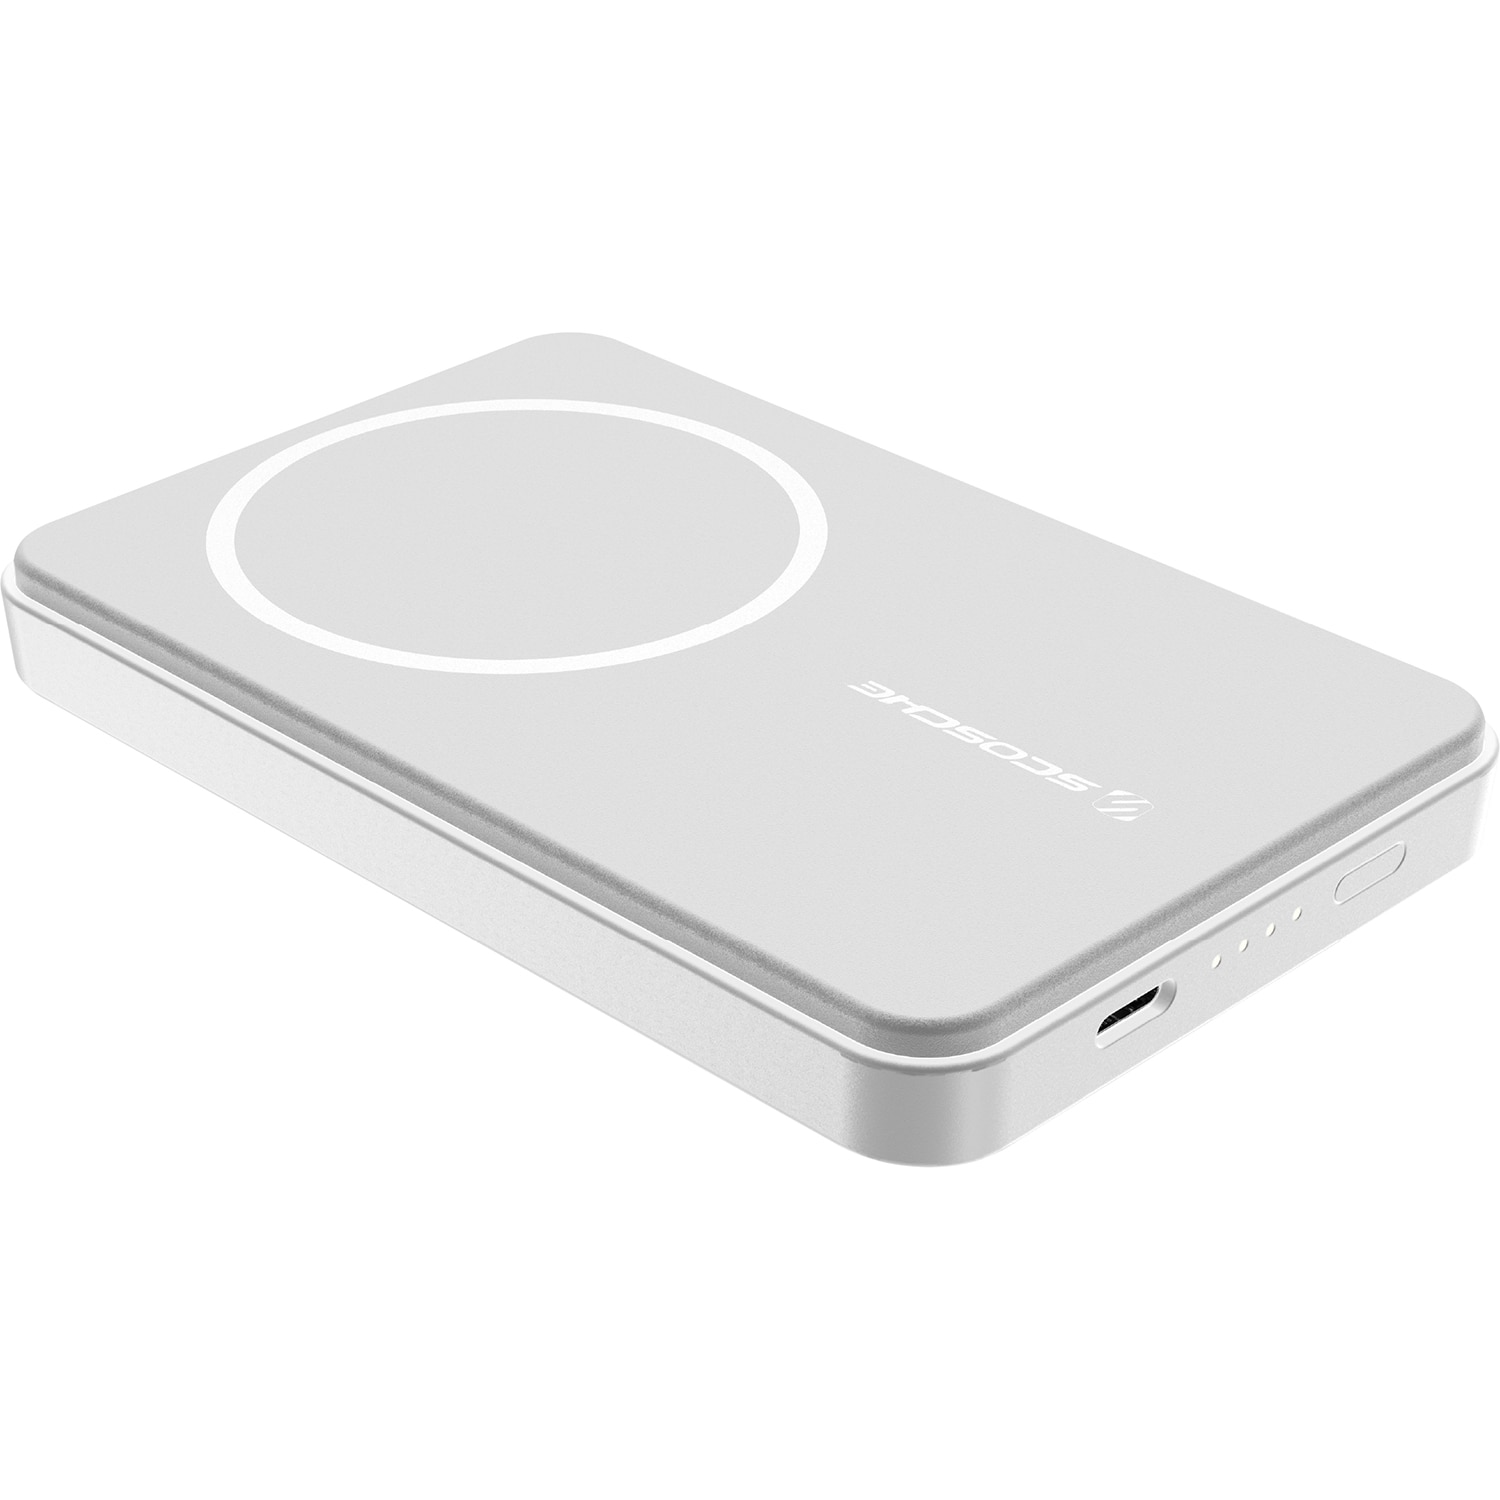 GoBat MS 5K MagSafe Wireless Charger- White